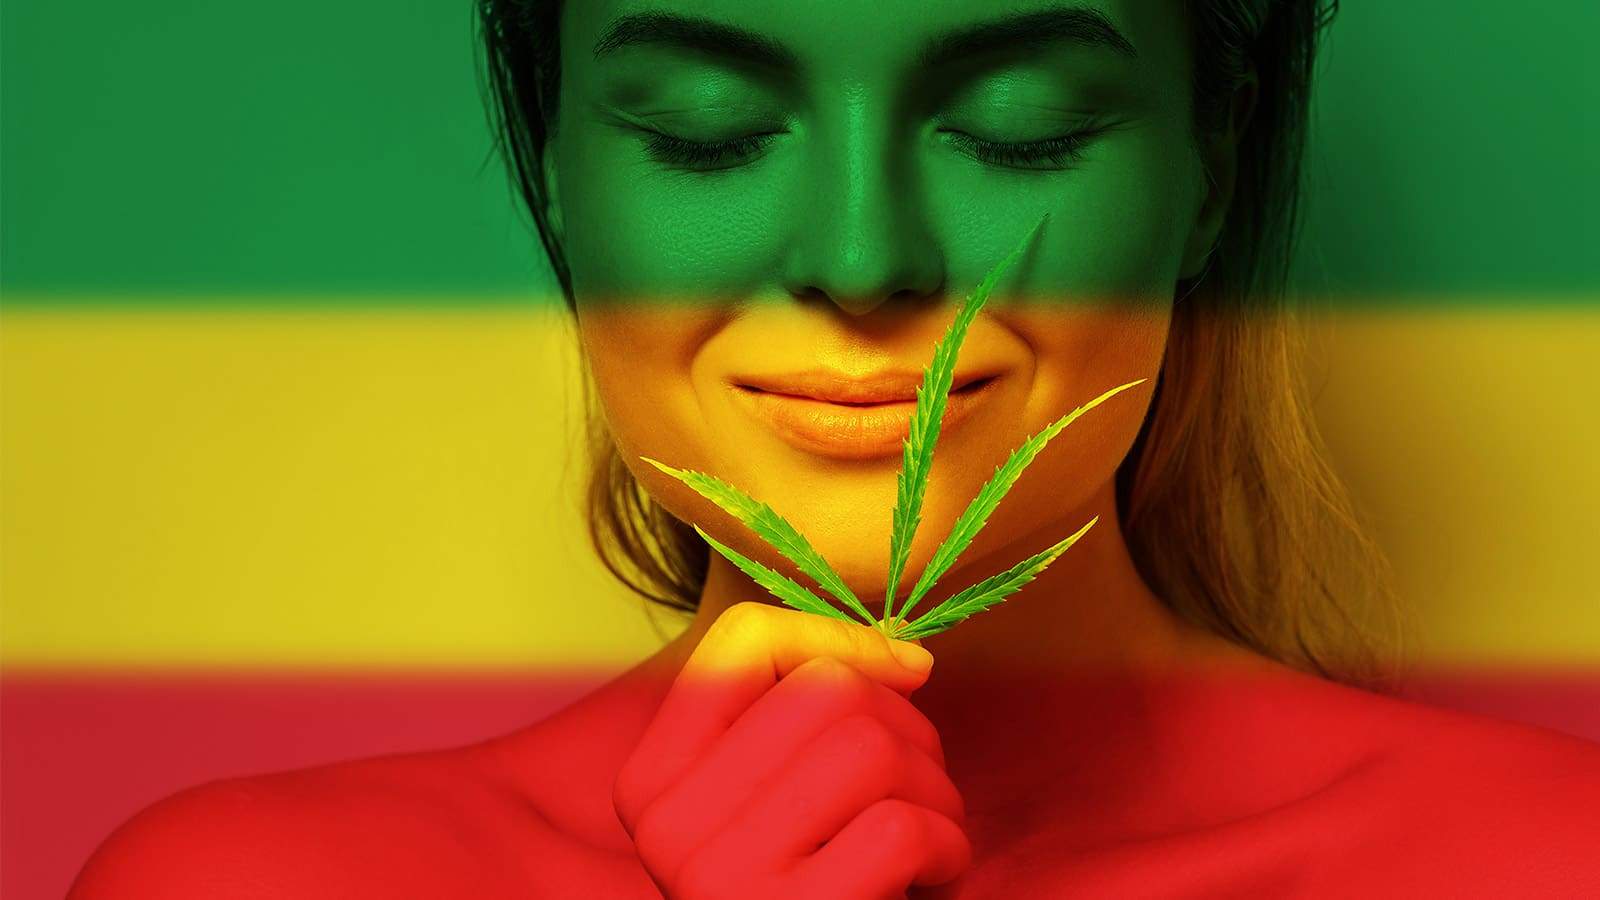 Femme-reniflant-une-feuille-de-cannabis-avec-fond-vert-jaune-rouge